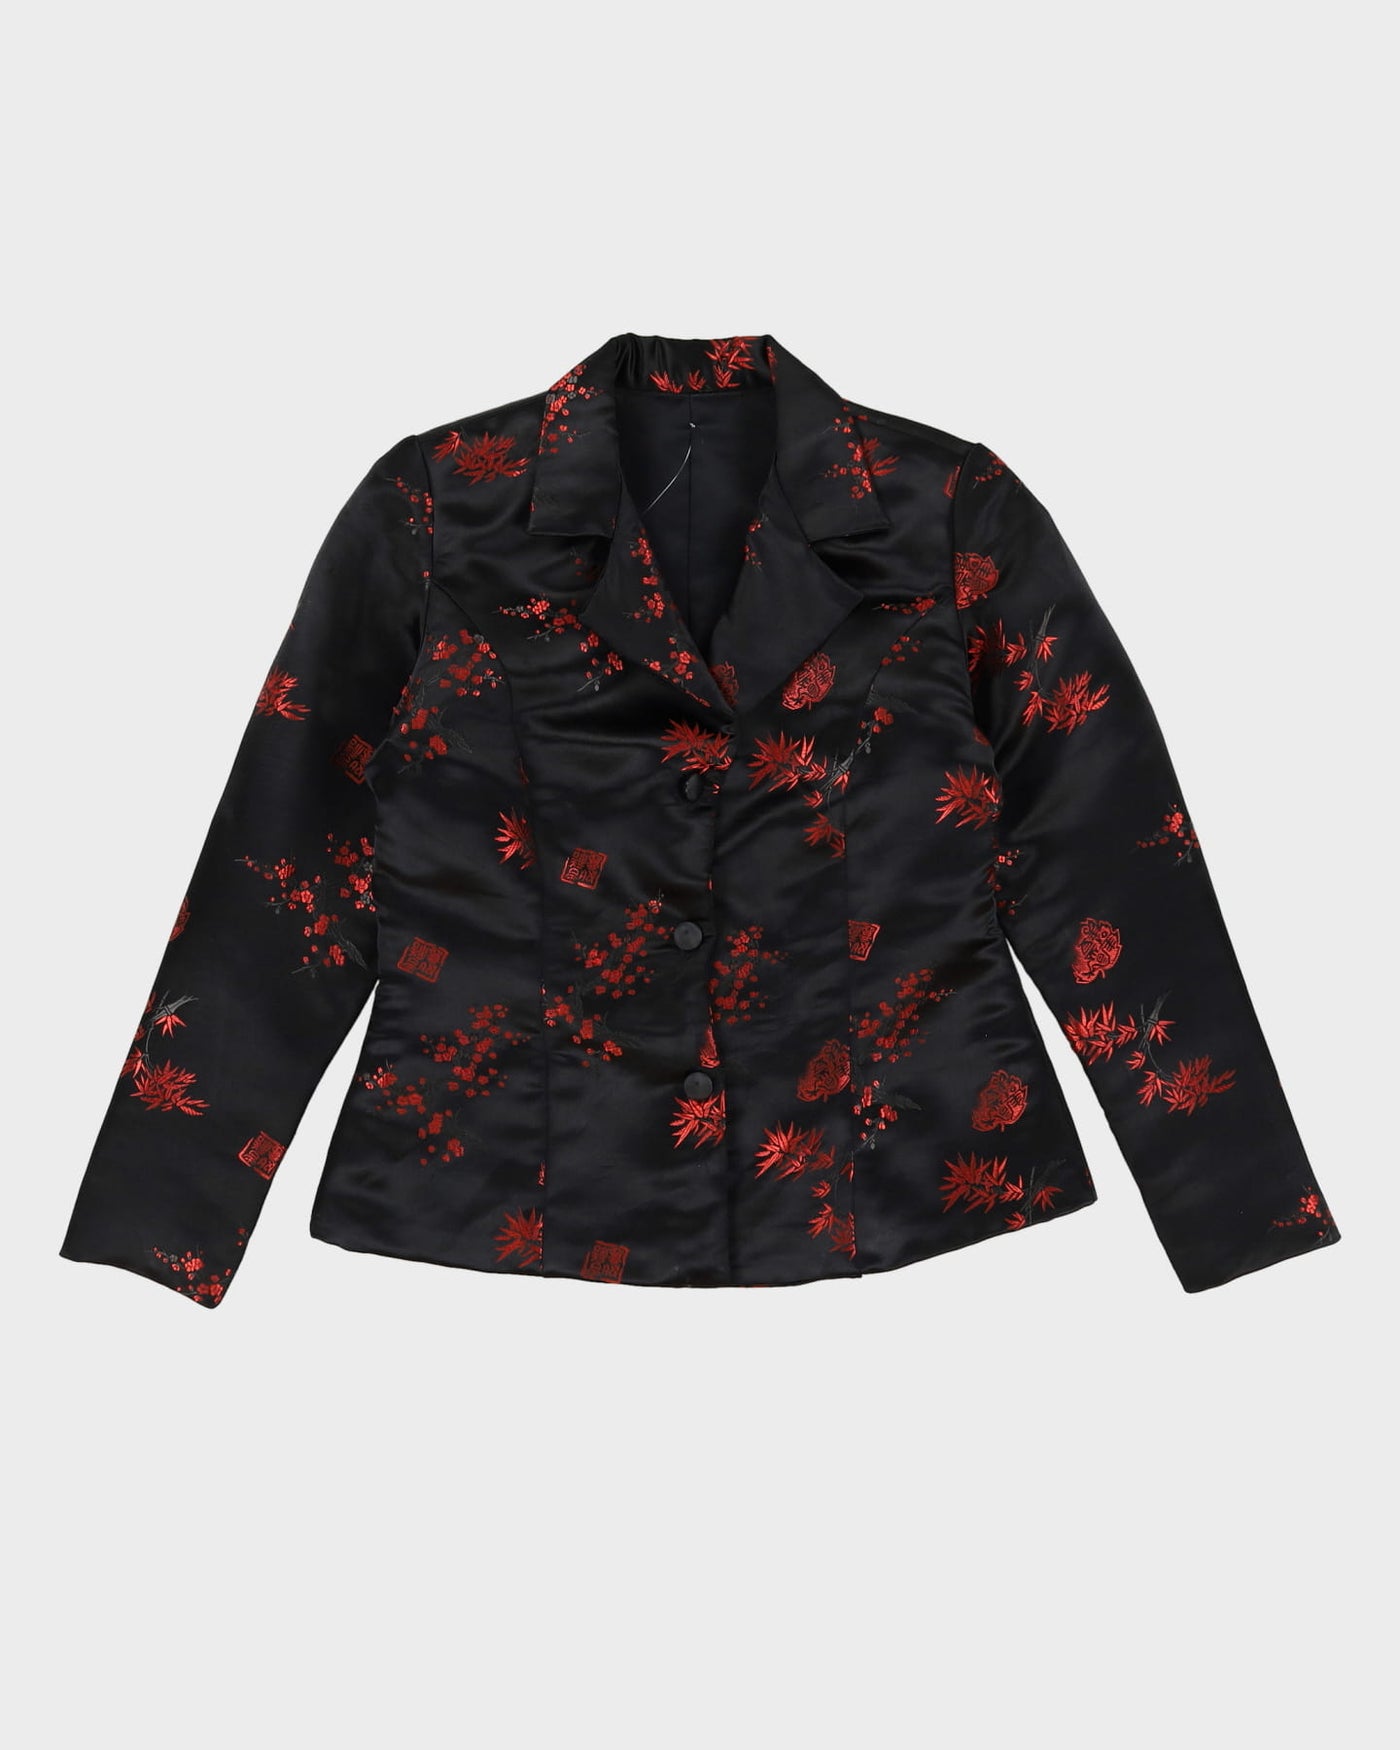 Black With Red Brocade Cheongsam Style Blazer - S